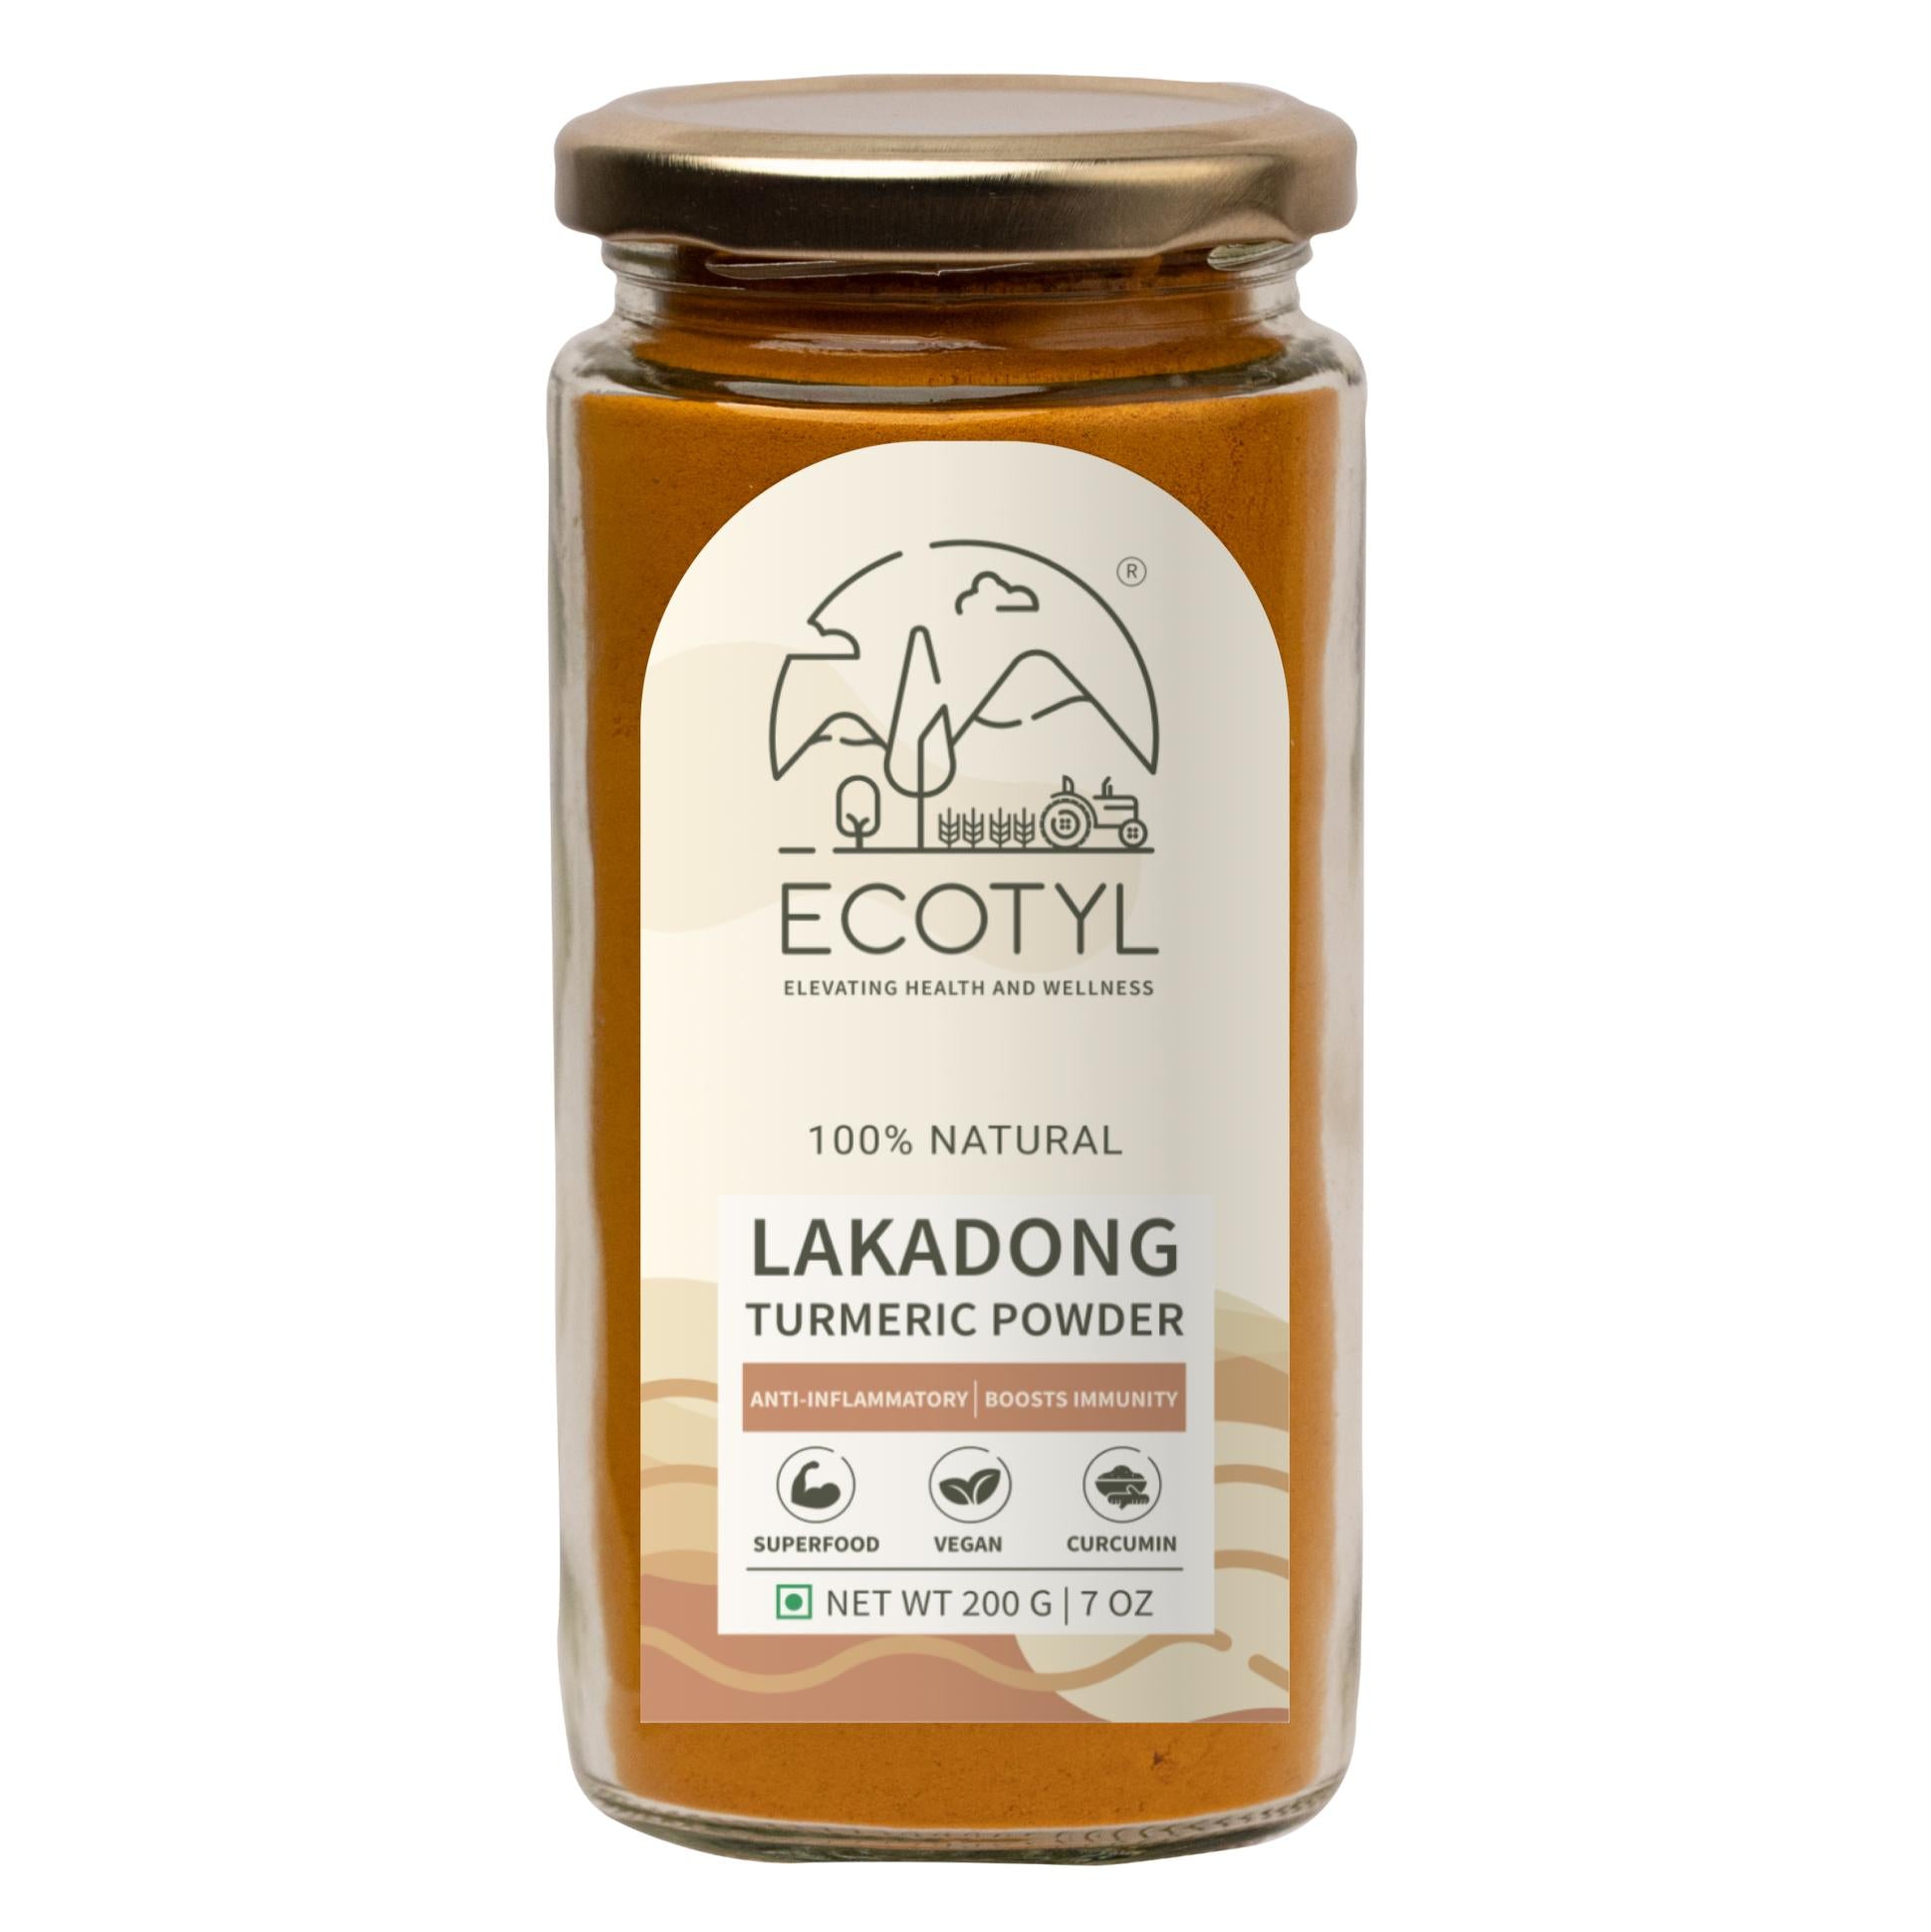 Ecotyl Lakadong Turmeric Powder for Strong Immunity | High Curcumin | 200g